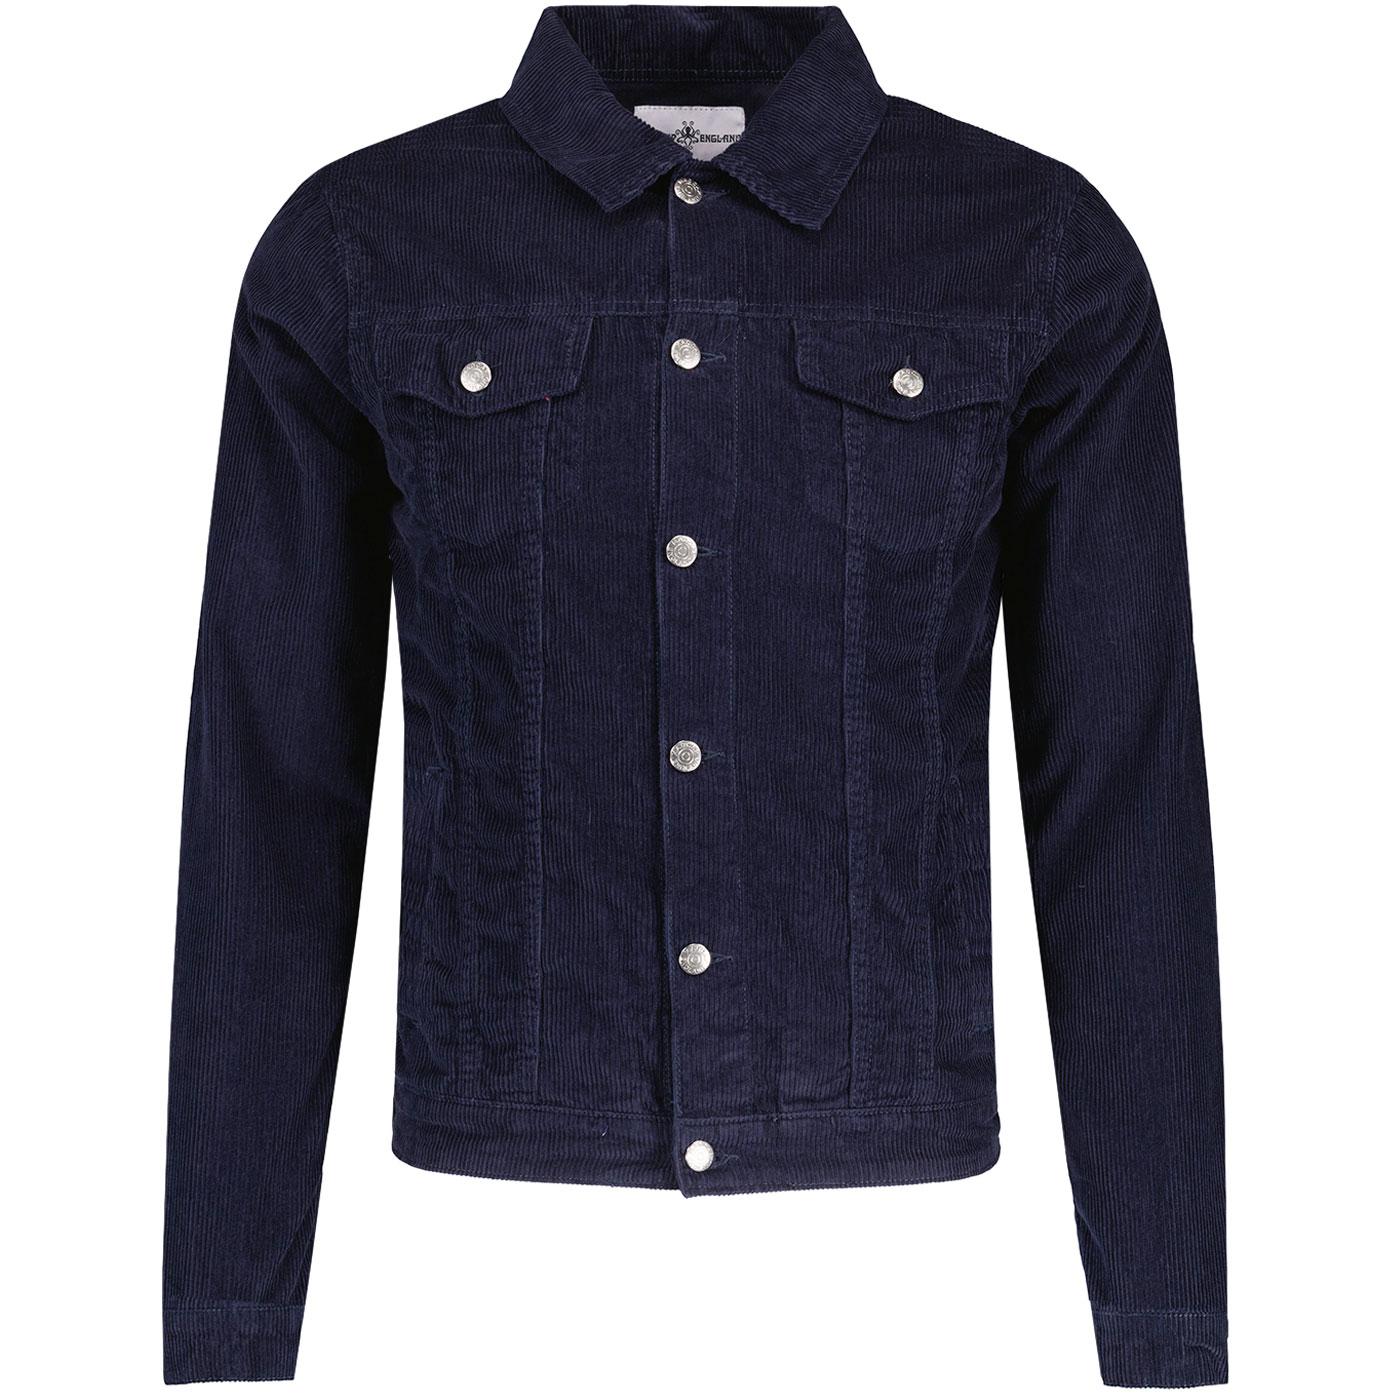 Jackets & Coats | Cord Jacket, Parkas, Tunics | Madcap England